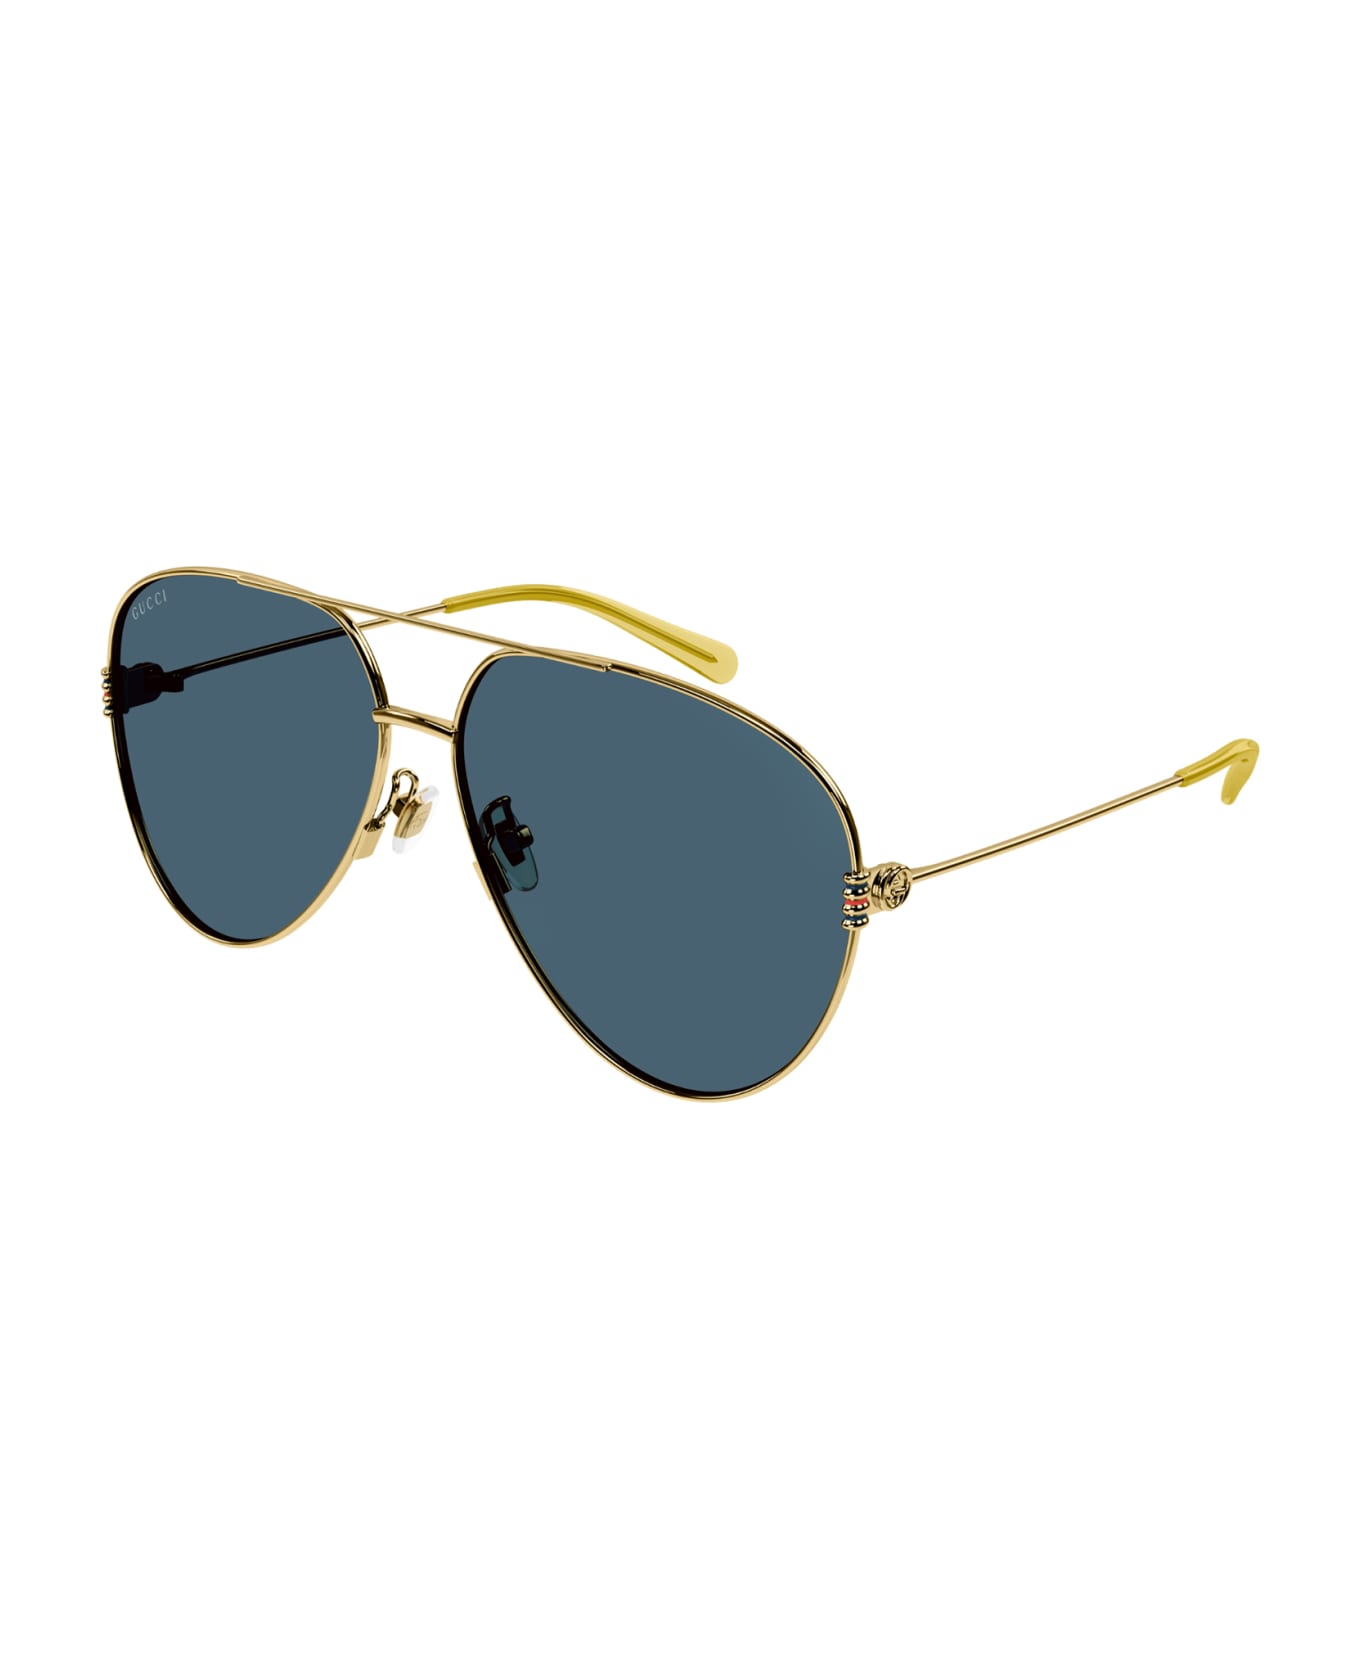 Gucci Eyewear GG1280S Sunglasses - Gold Gold Blue